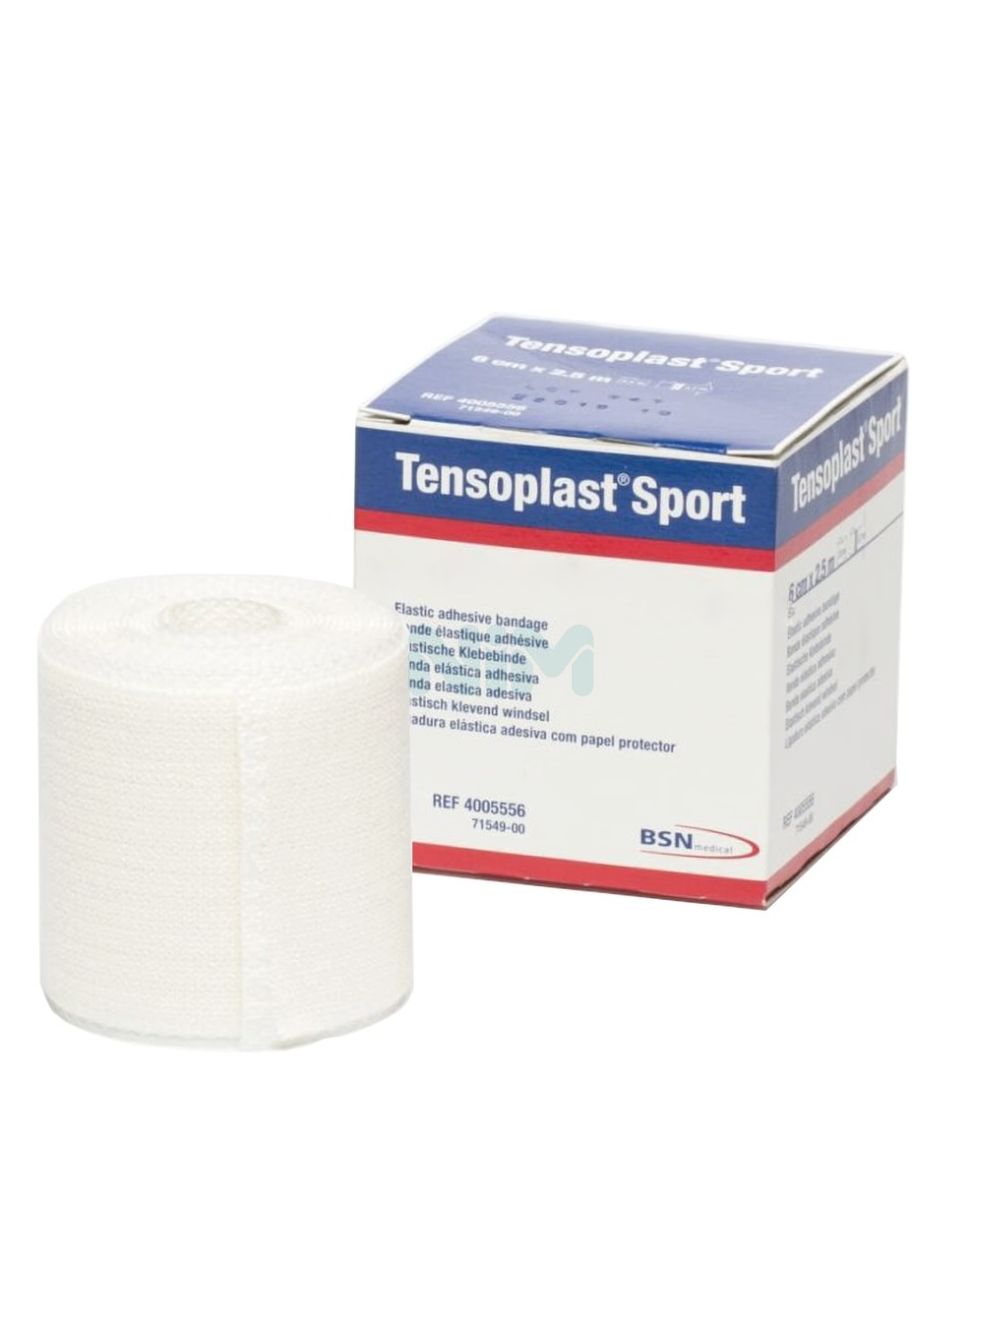 Tensoplast Sport Benda elastica adesiva ipoallergenica con